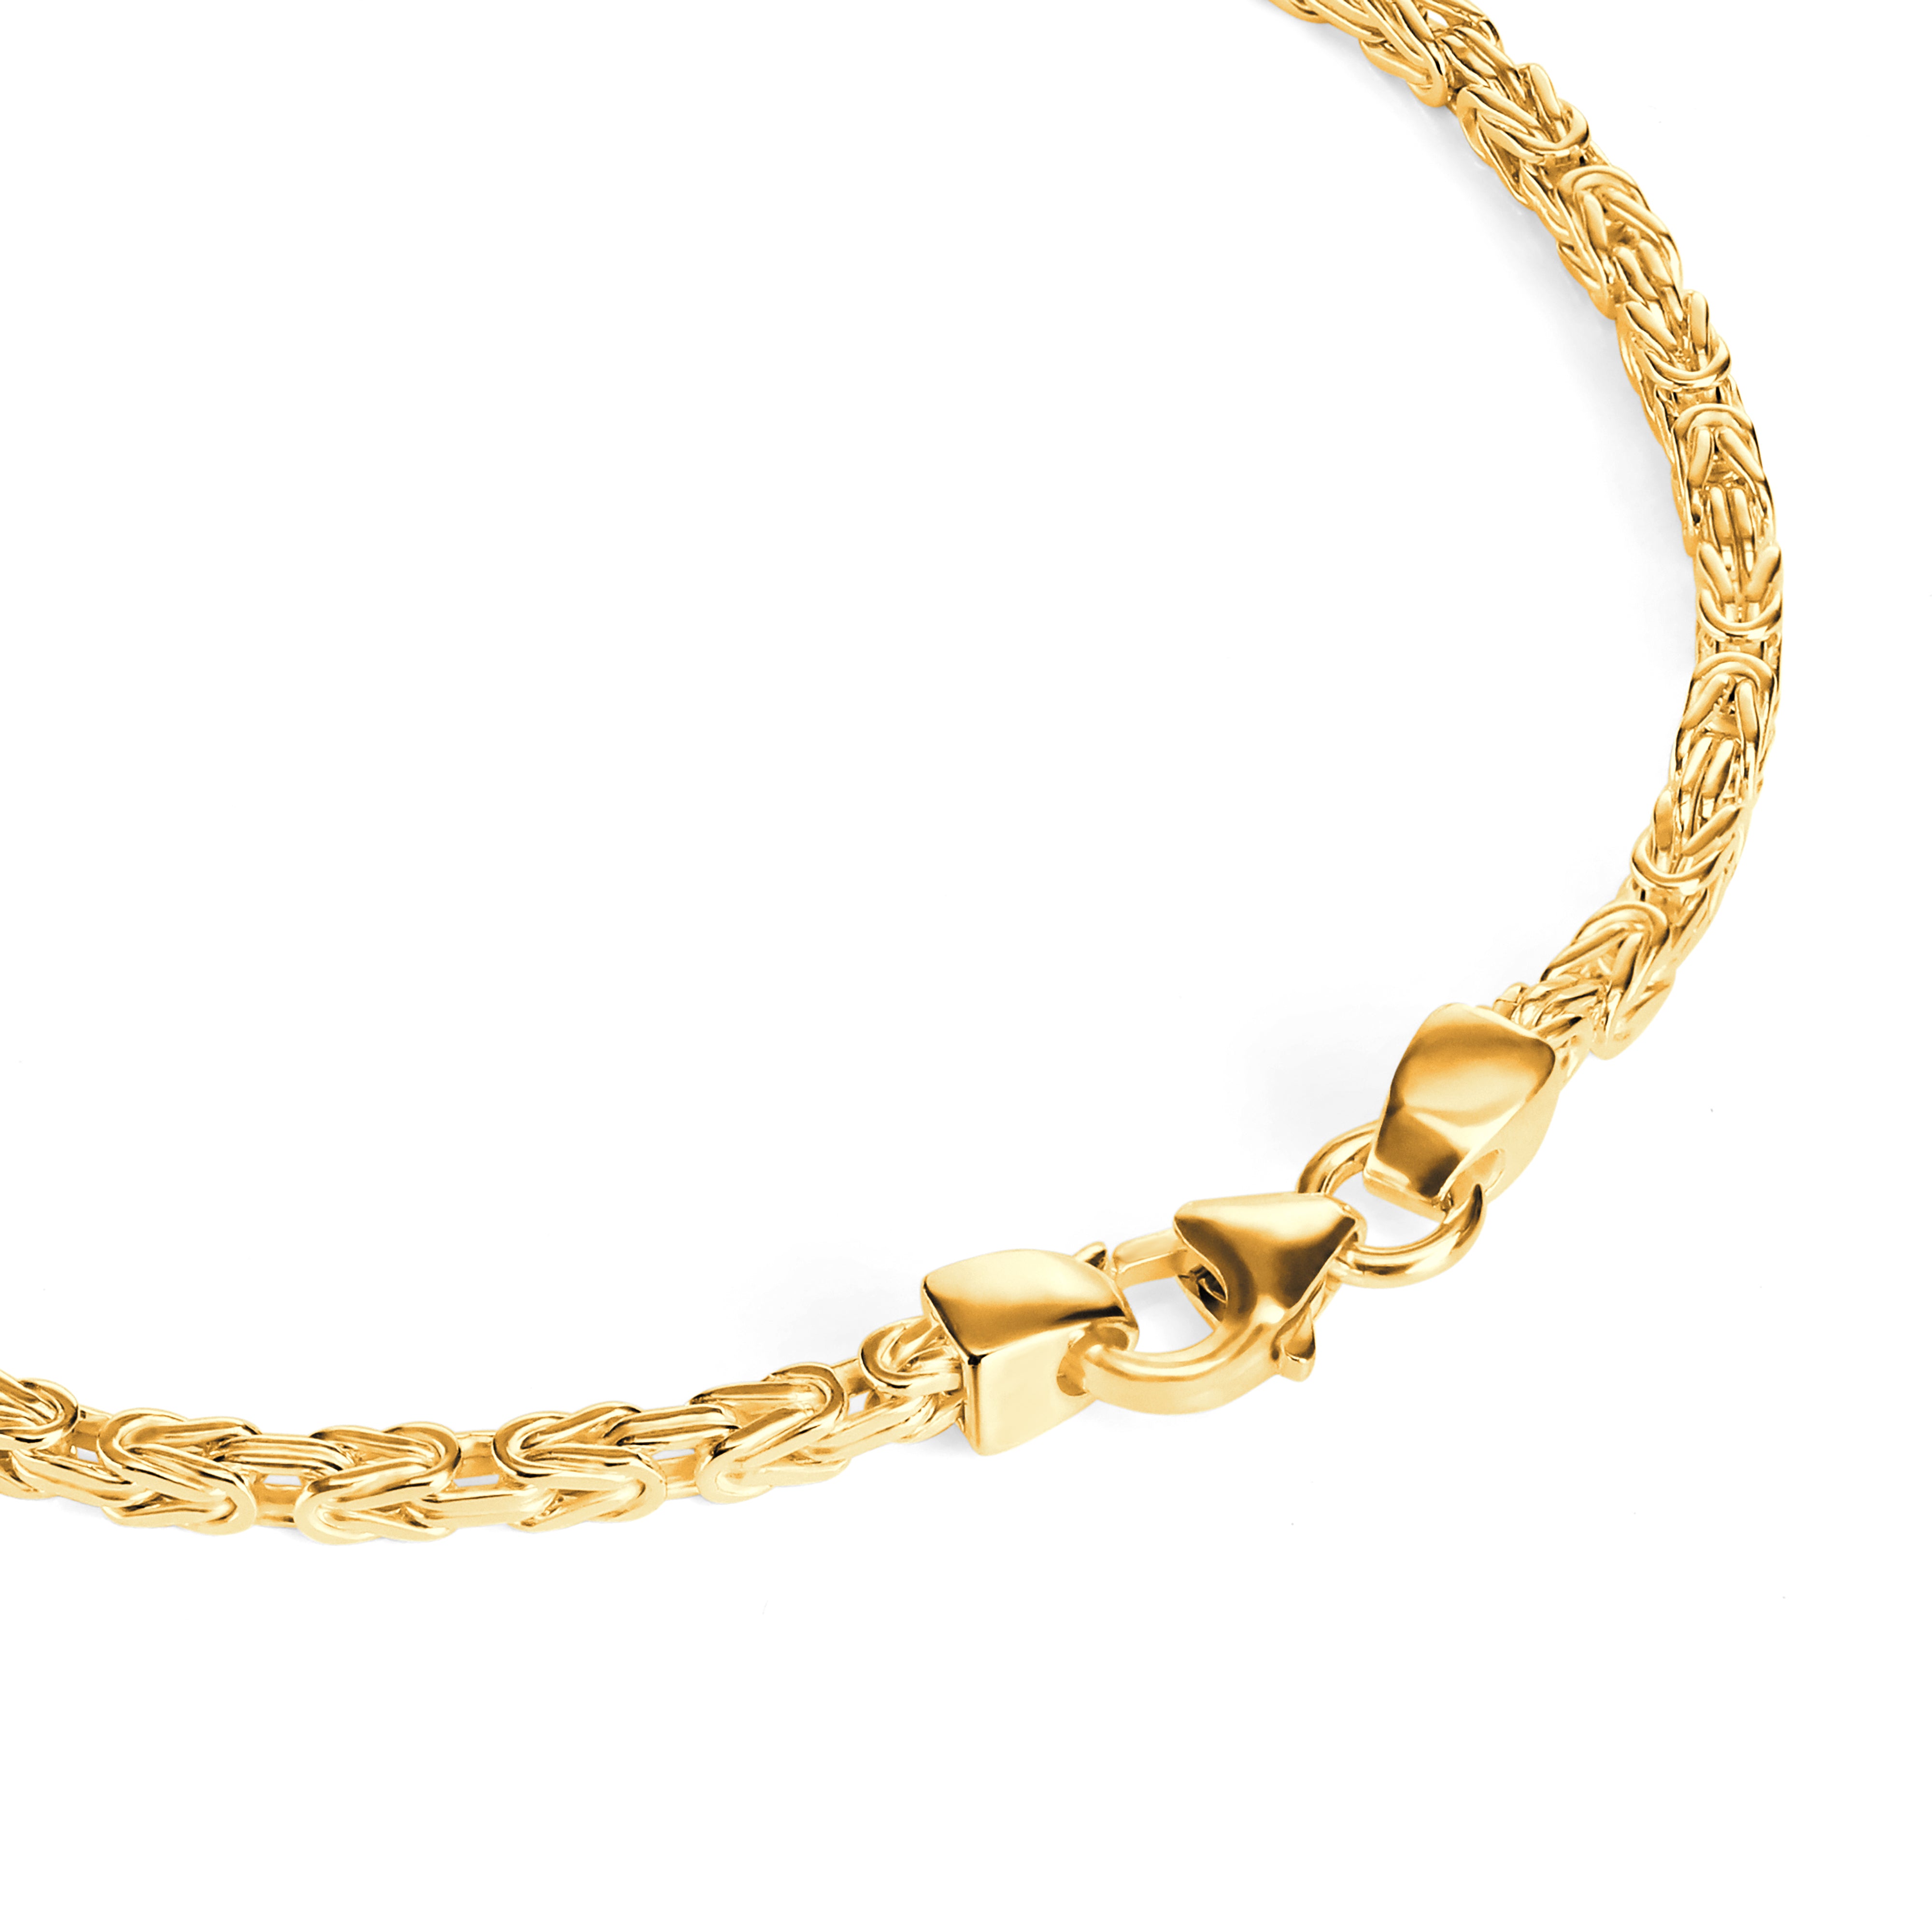 Byzantine bracelet 2.5mm wide - 585 gold - solid